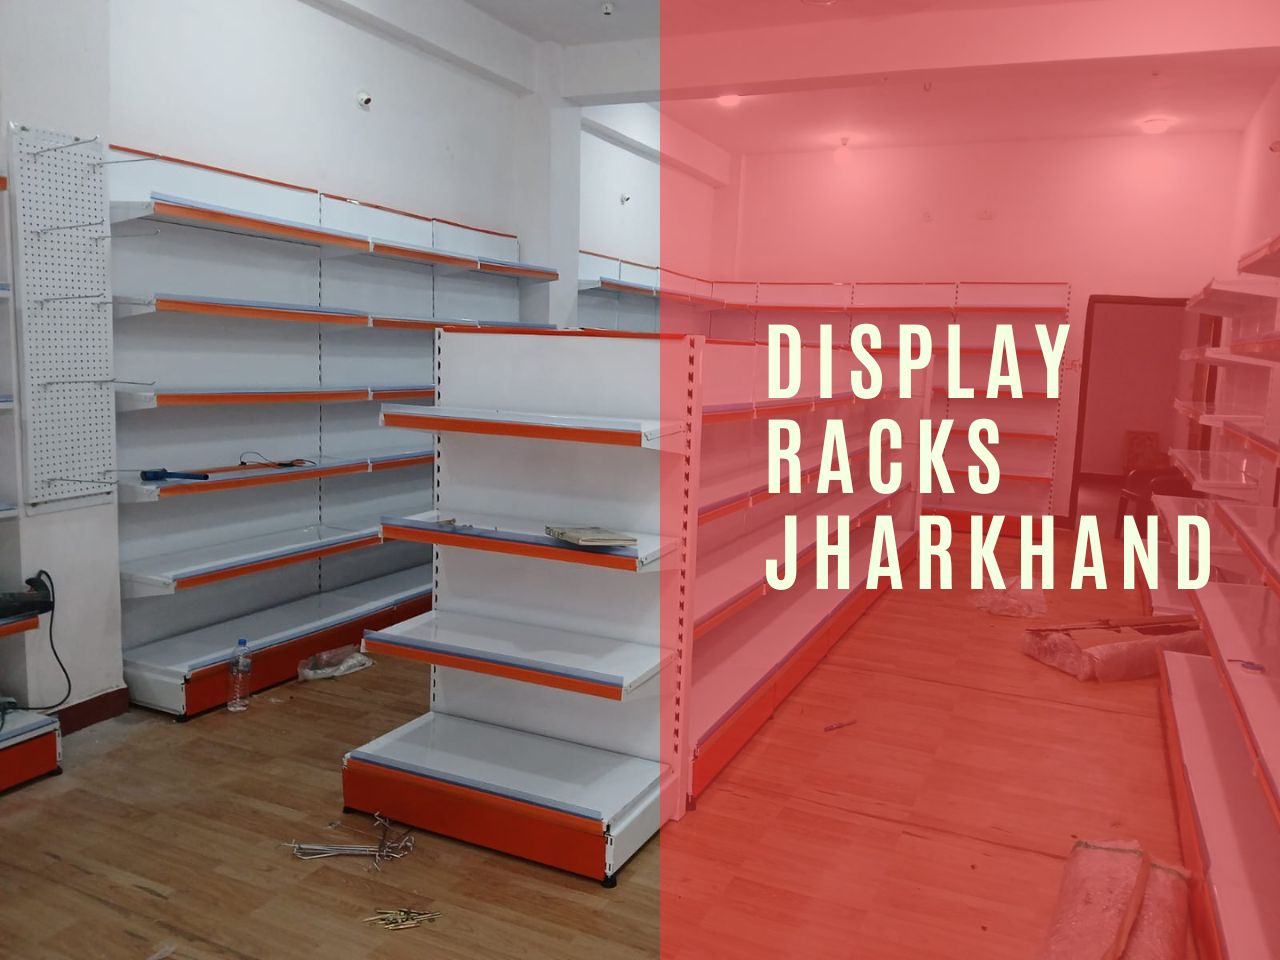 Display racks  Jharkhand.jpg